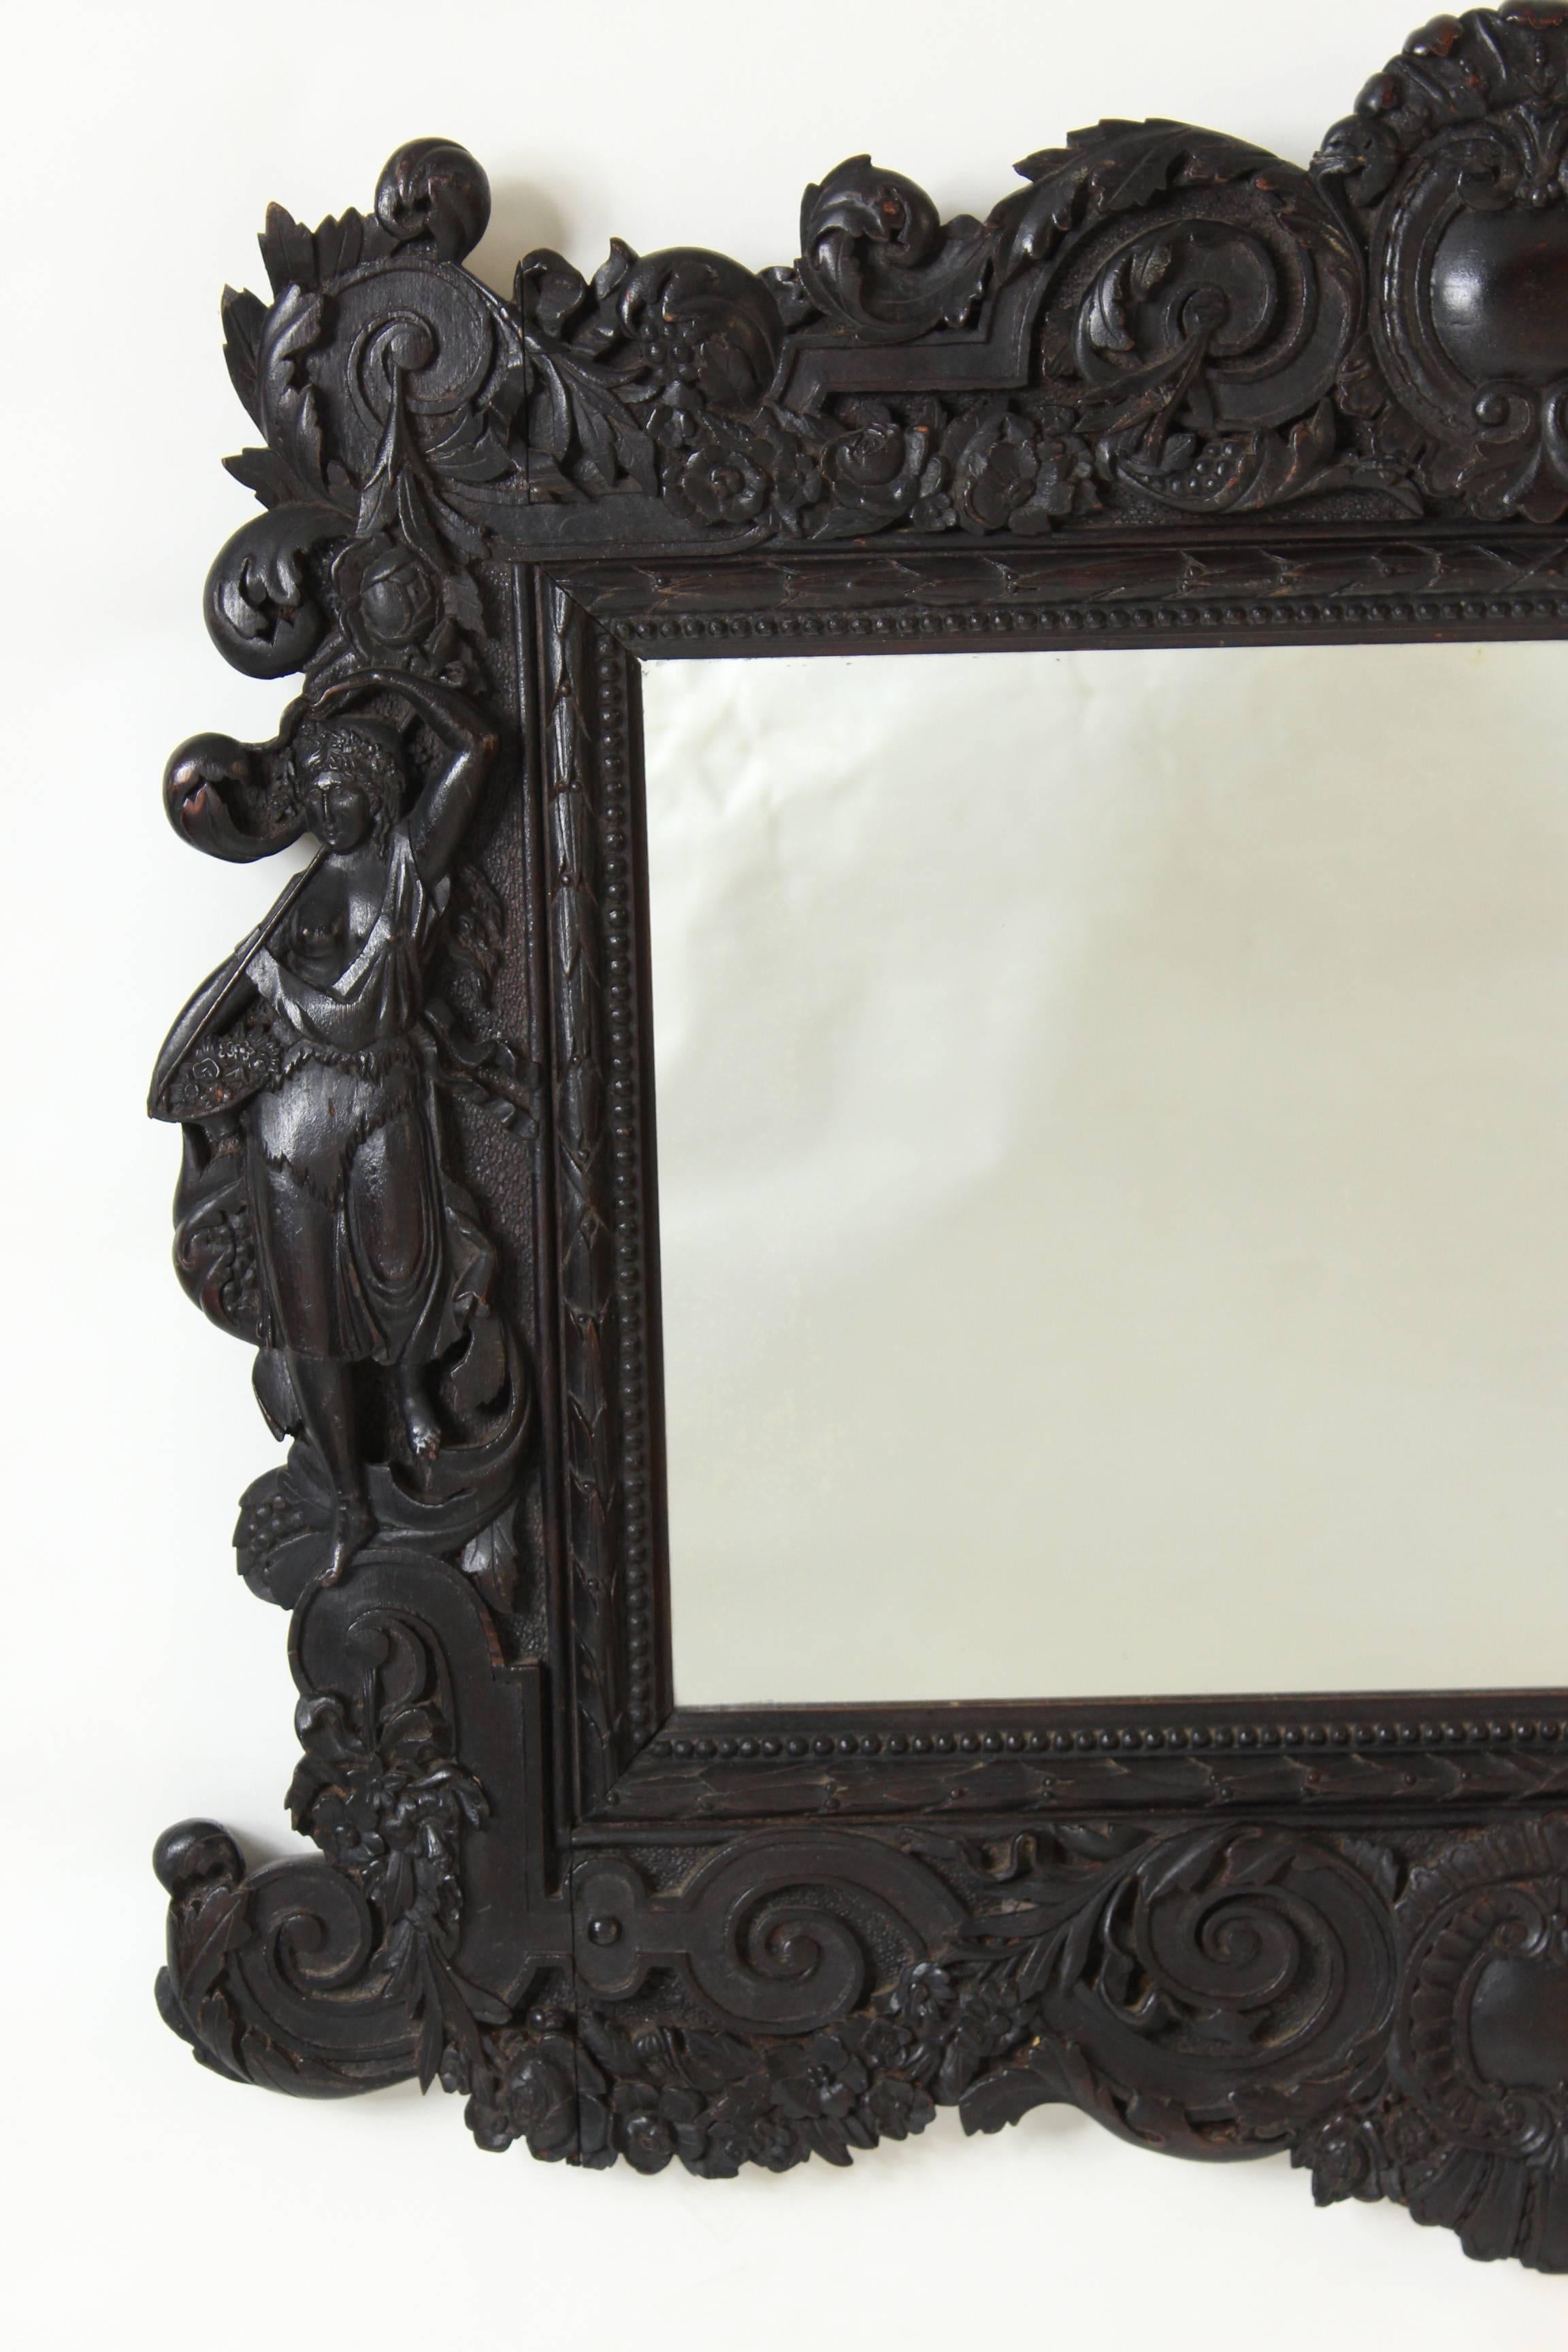 Renaissance Revival carved mahogany mirror, late 19th century.